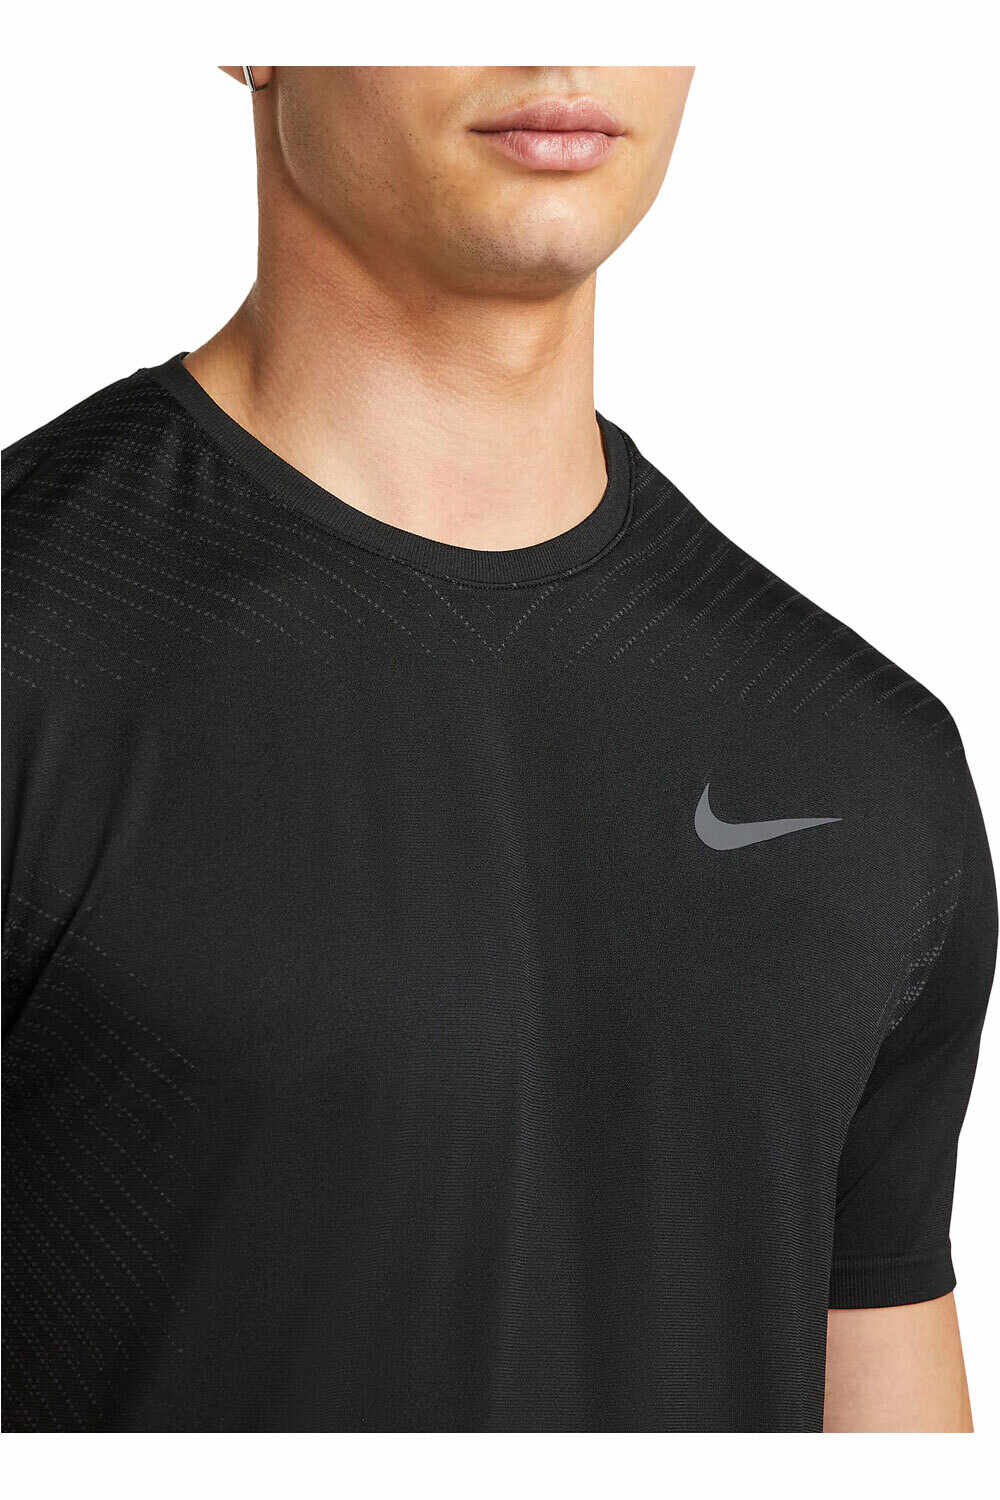 Nike camiseta fitness hombre M NK DF SEAMLESS SS TOP vista detalle